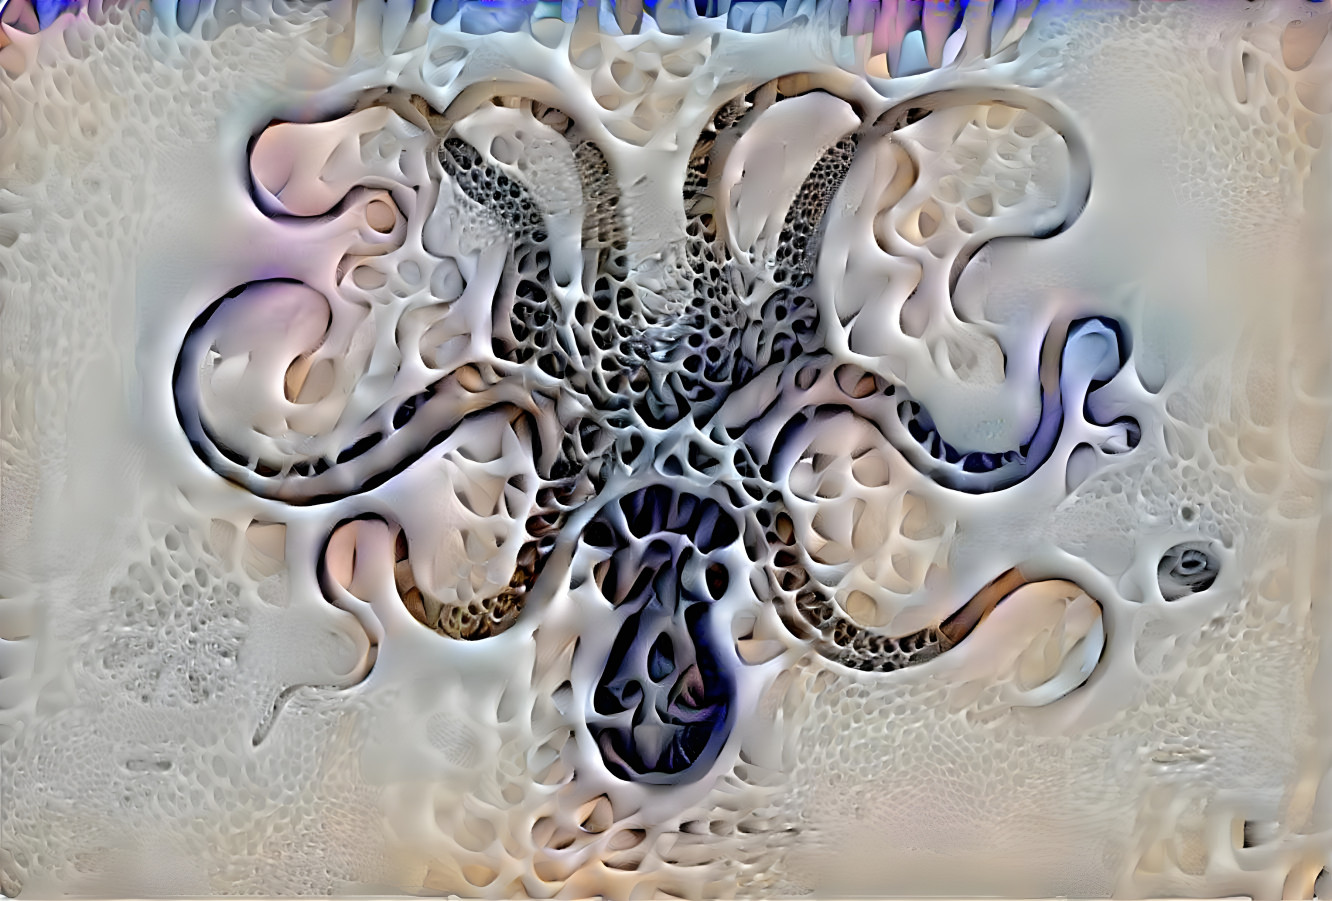 “Octopus”